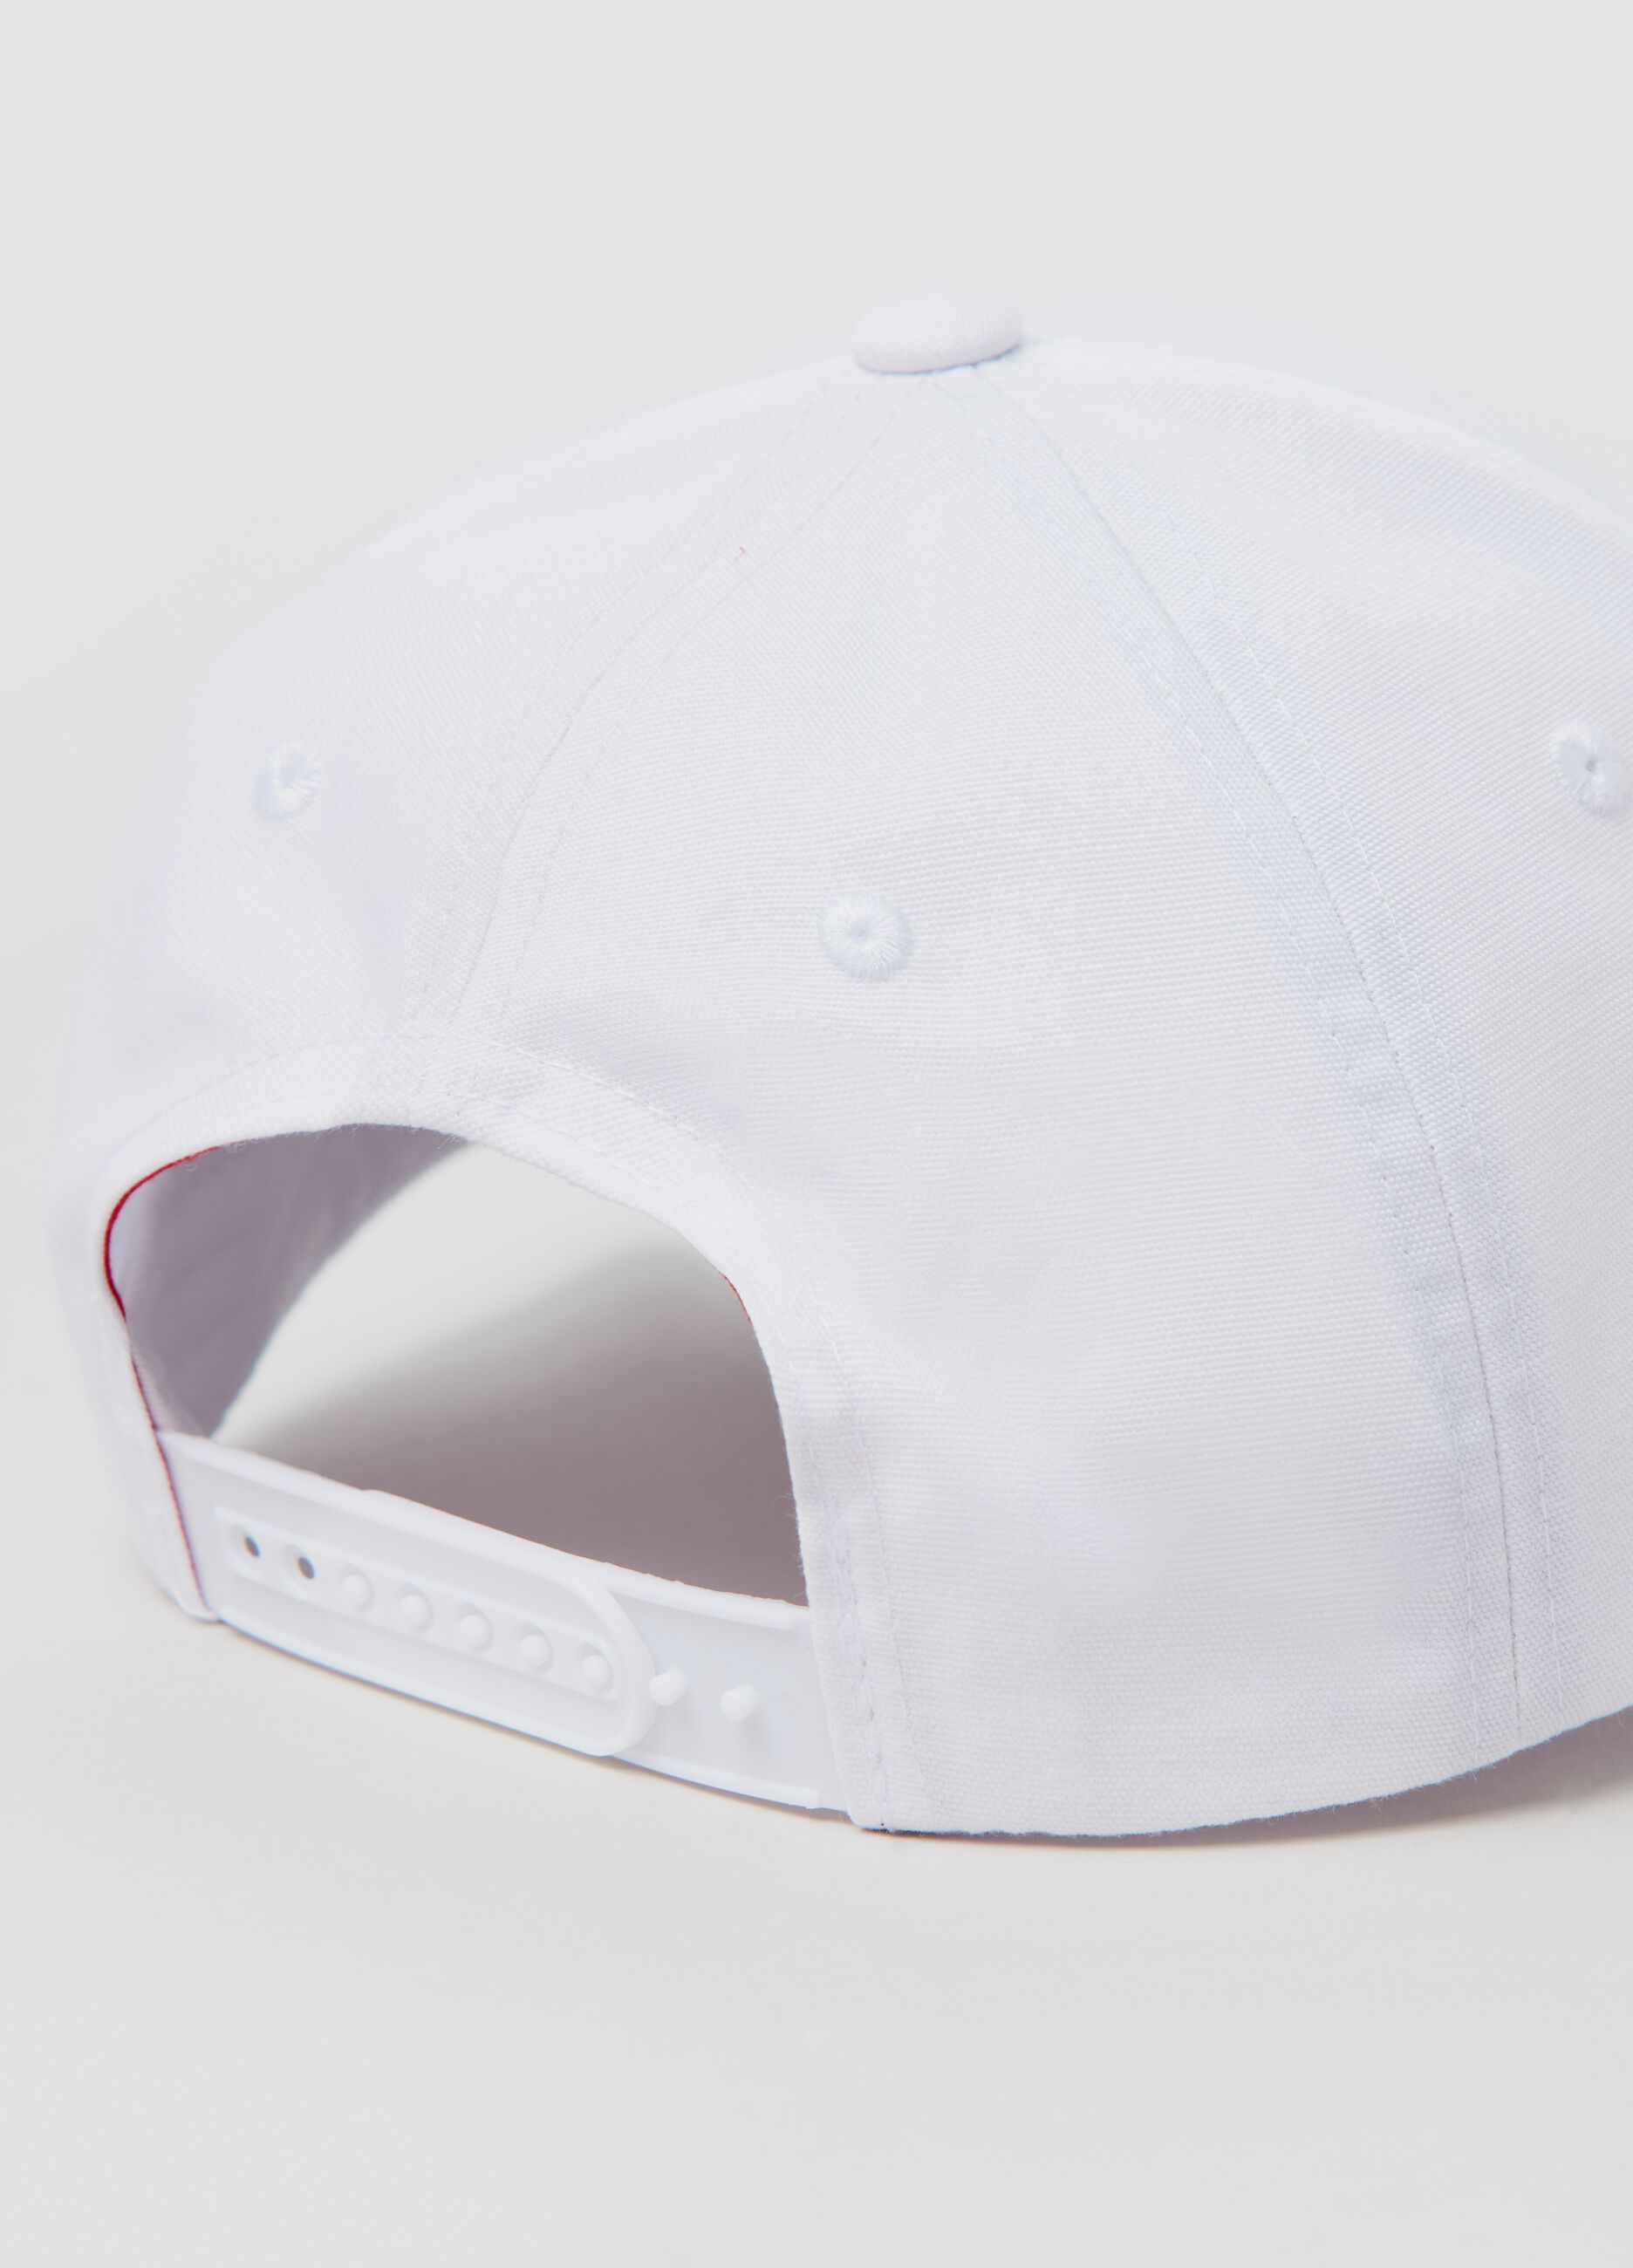 Baseball cap with NASA embroidery